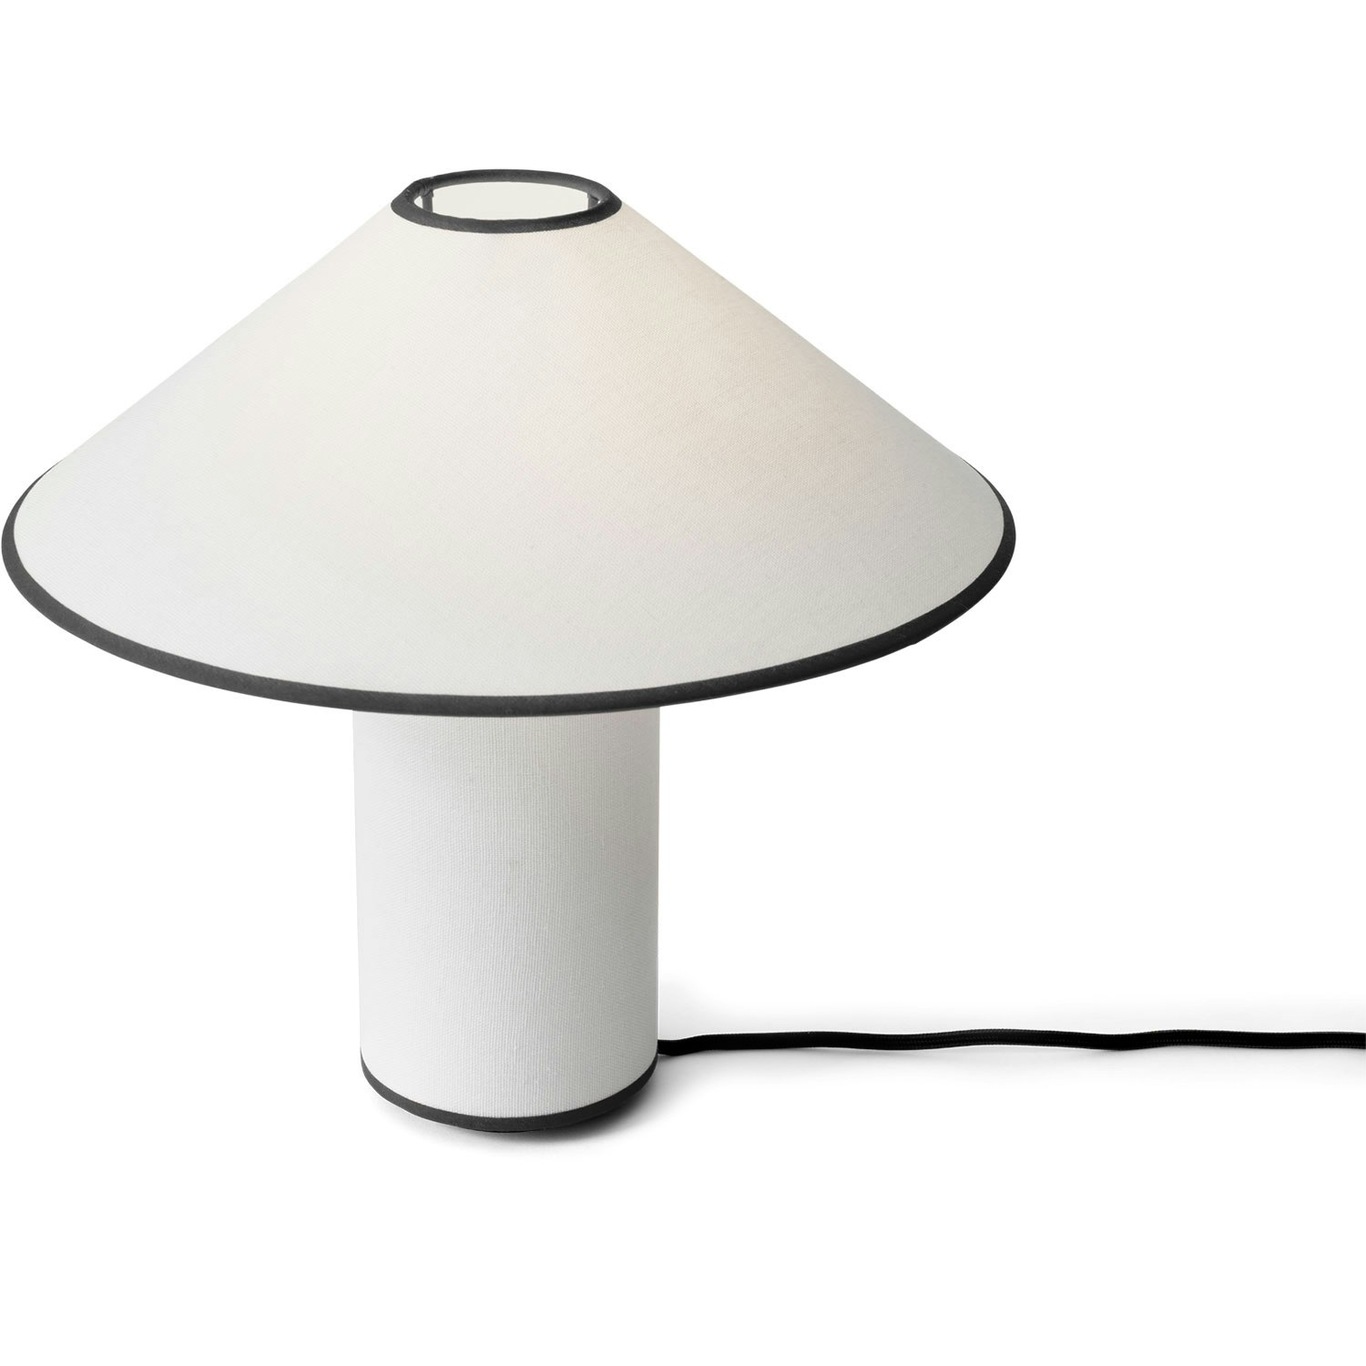 Colette ATD6 Bordlampe, Hvit/Svart